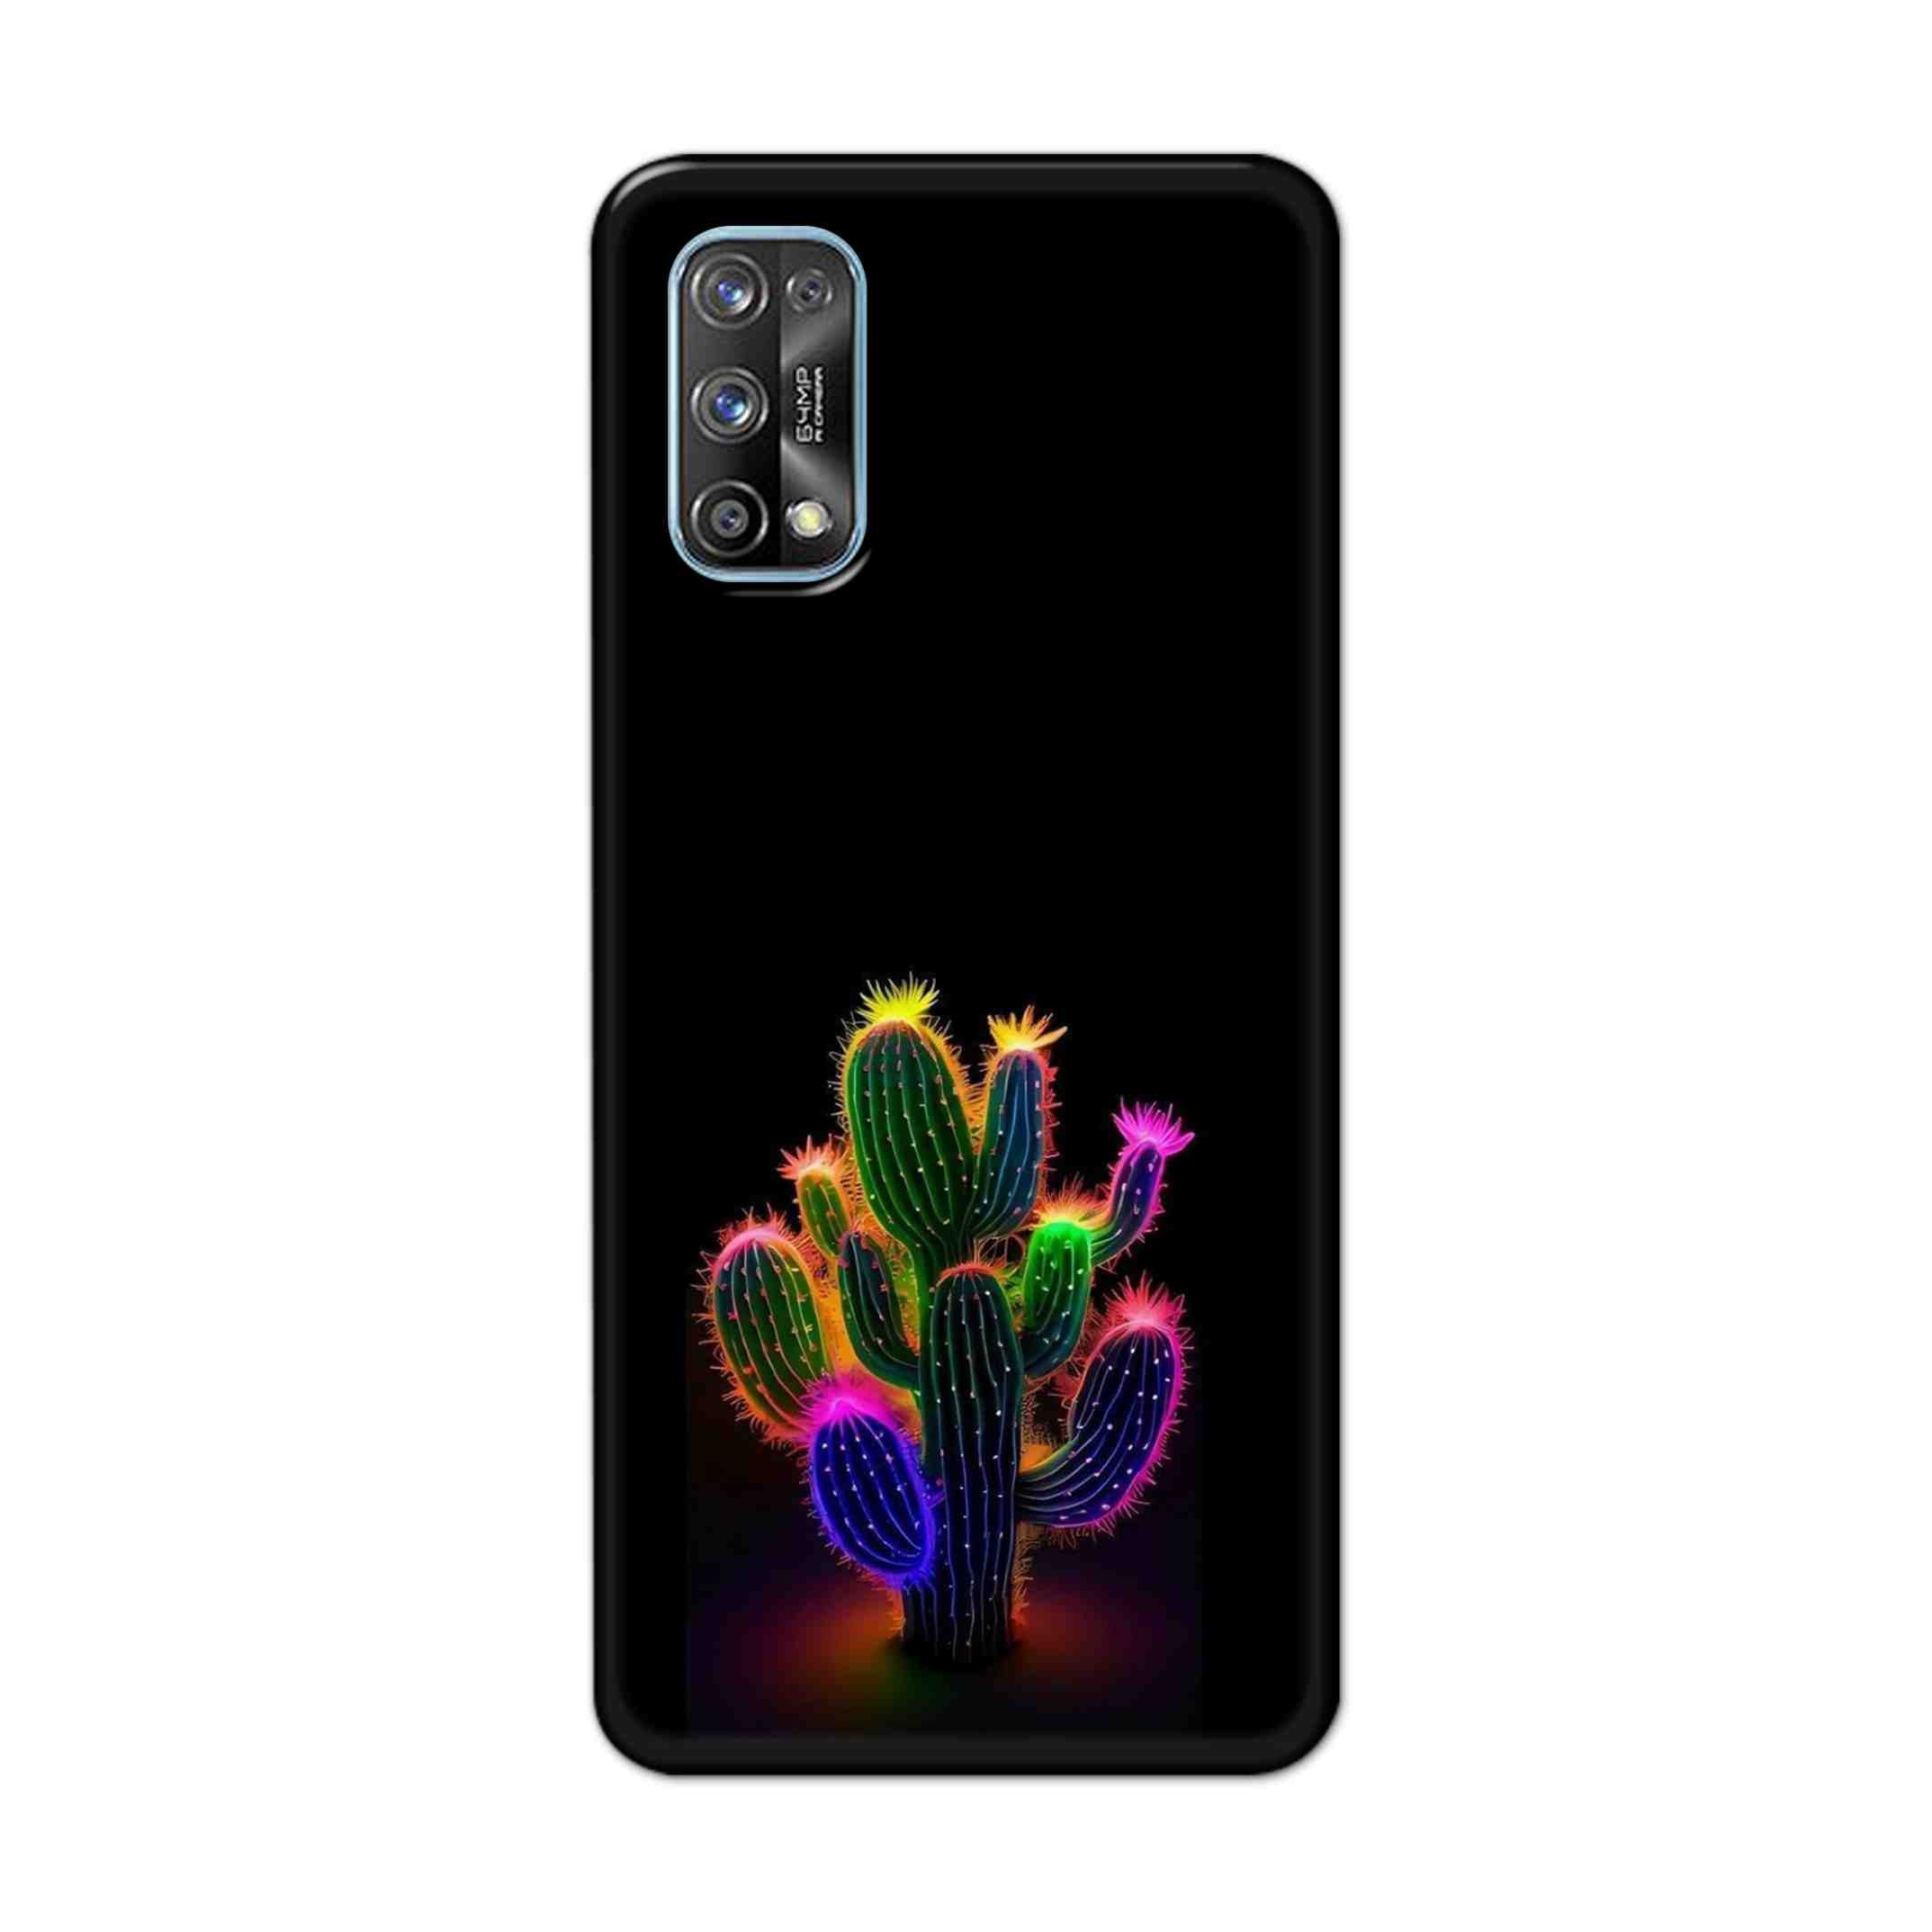 Buy Neon Flower Hard Back Mobile Phone Case Cover For Realme 7 Pro Online